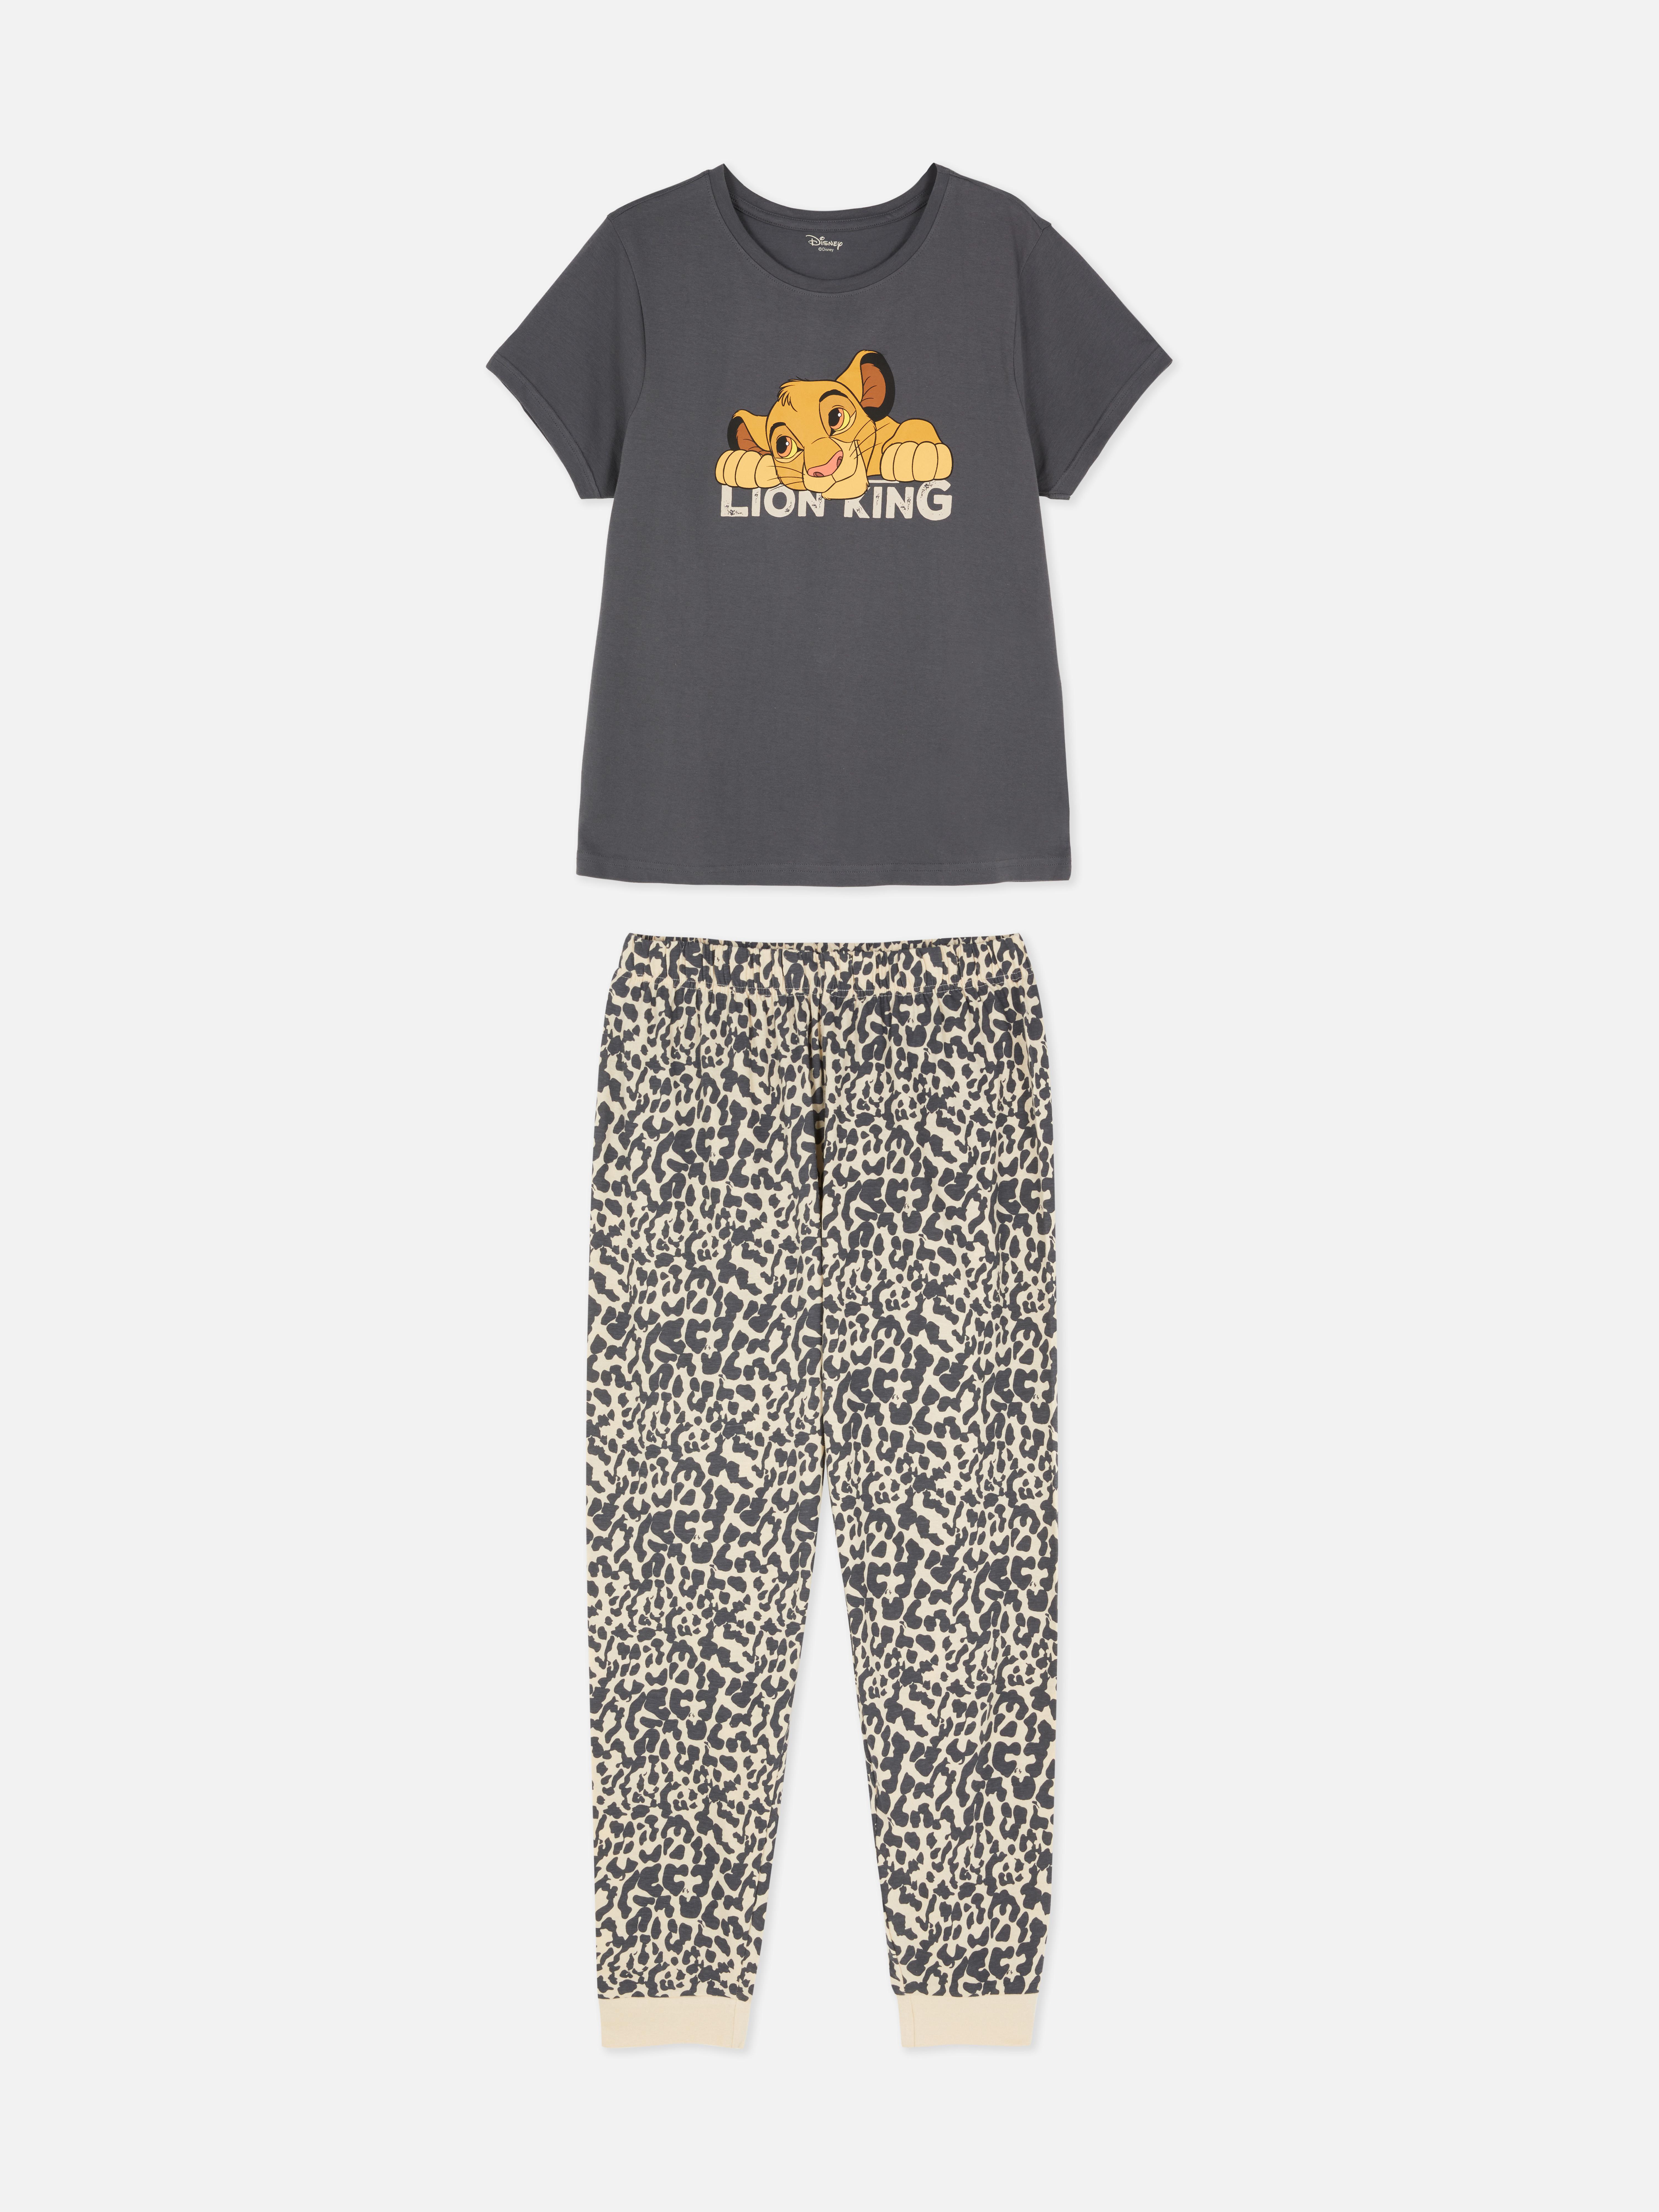 Pijama gráfico con personaje de Disney